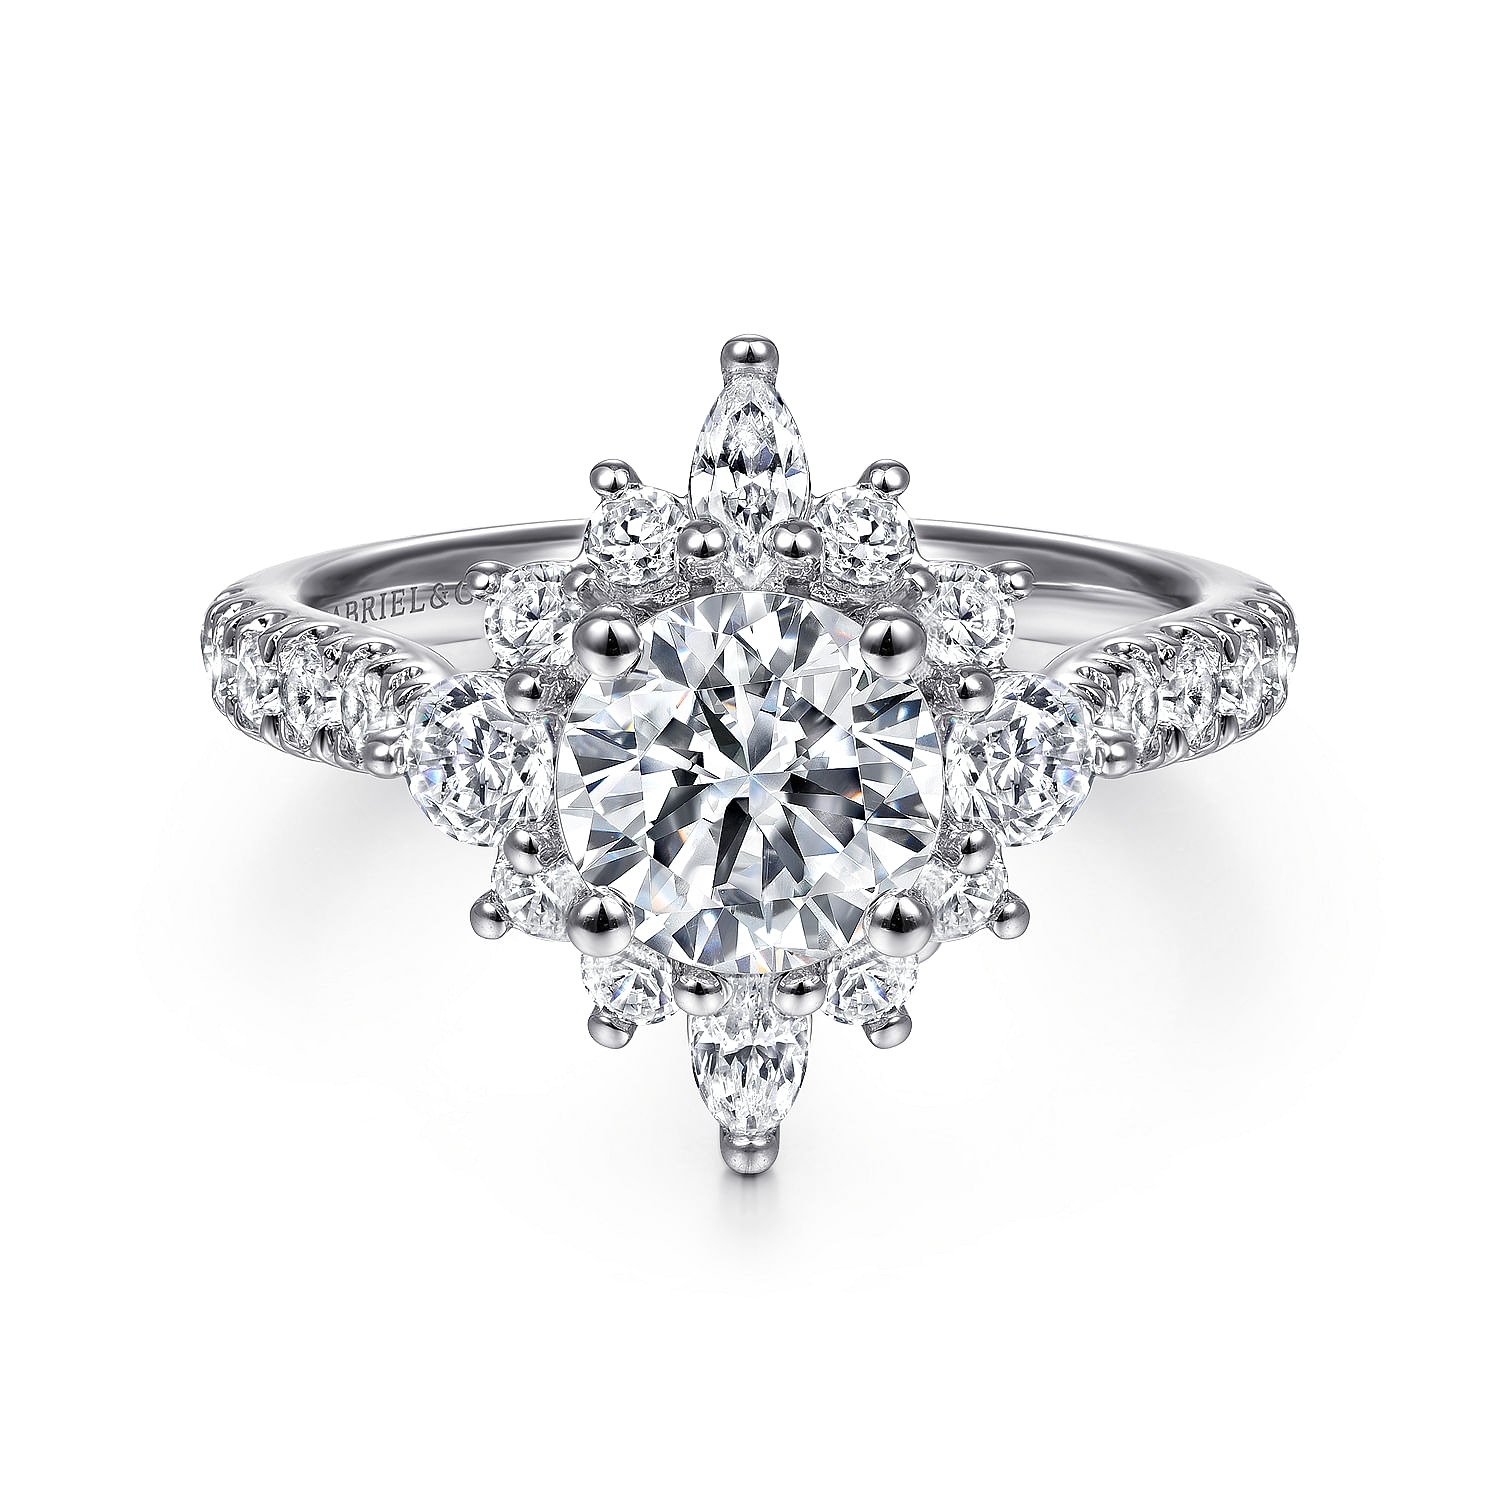 Astor - Unique 14K White Gold Halo Diamond Engagement Ring